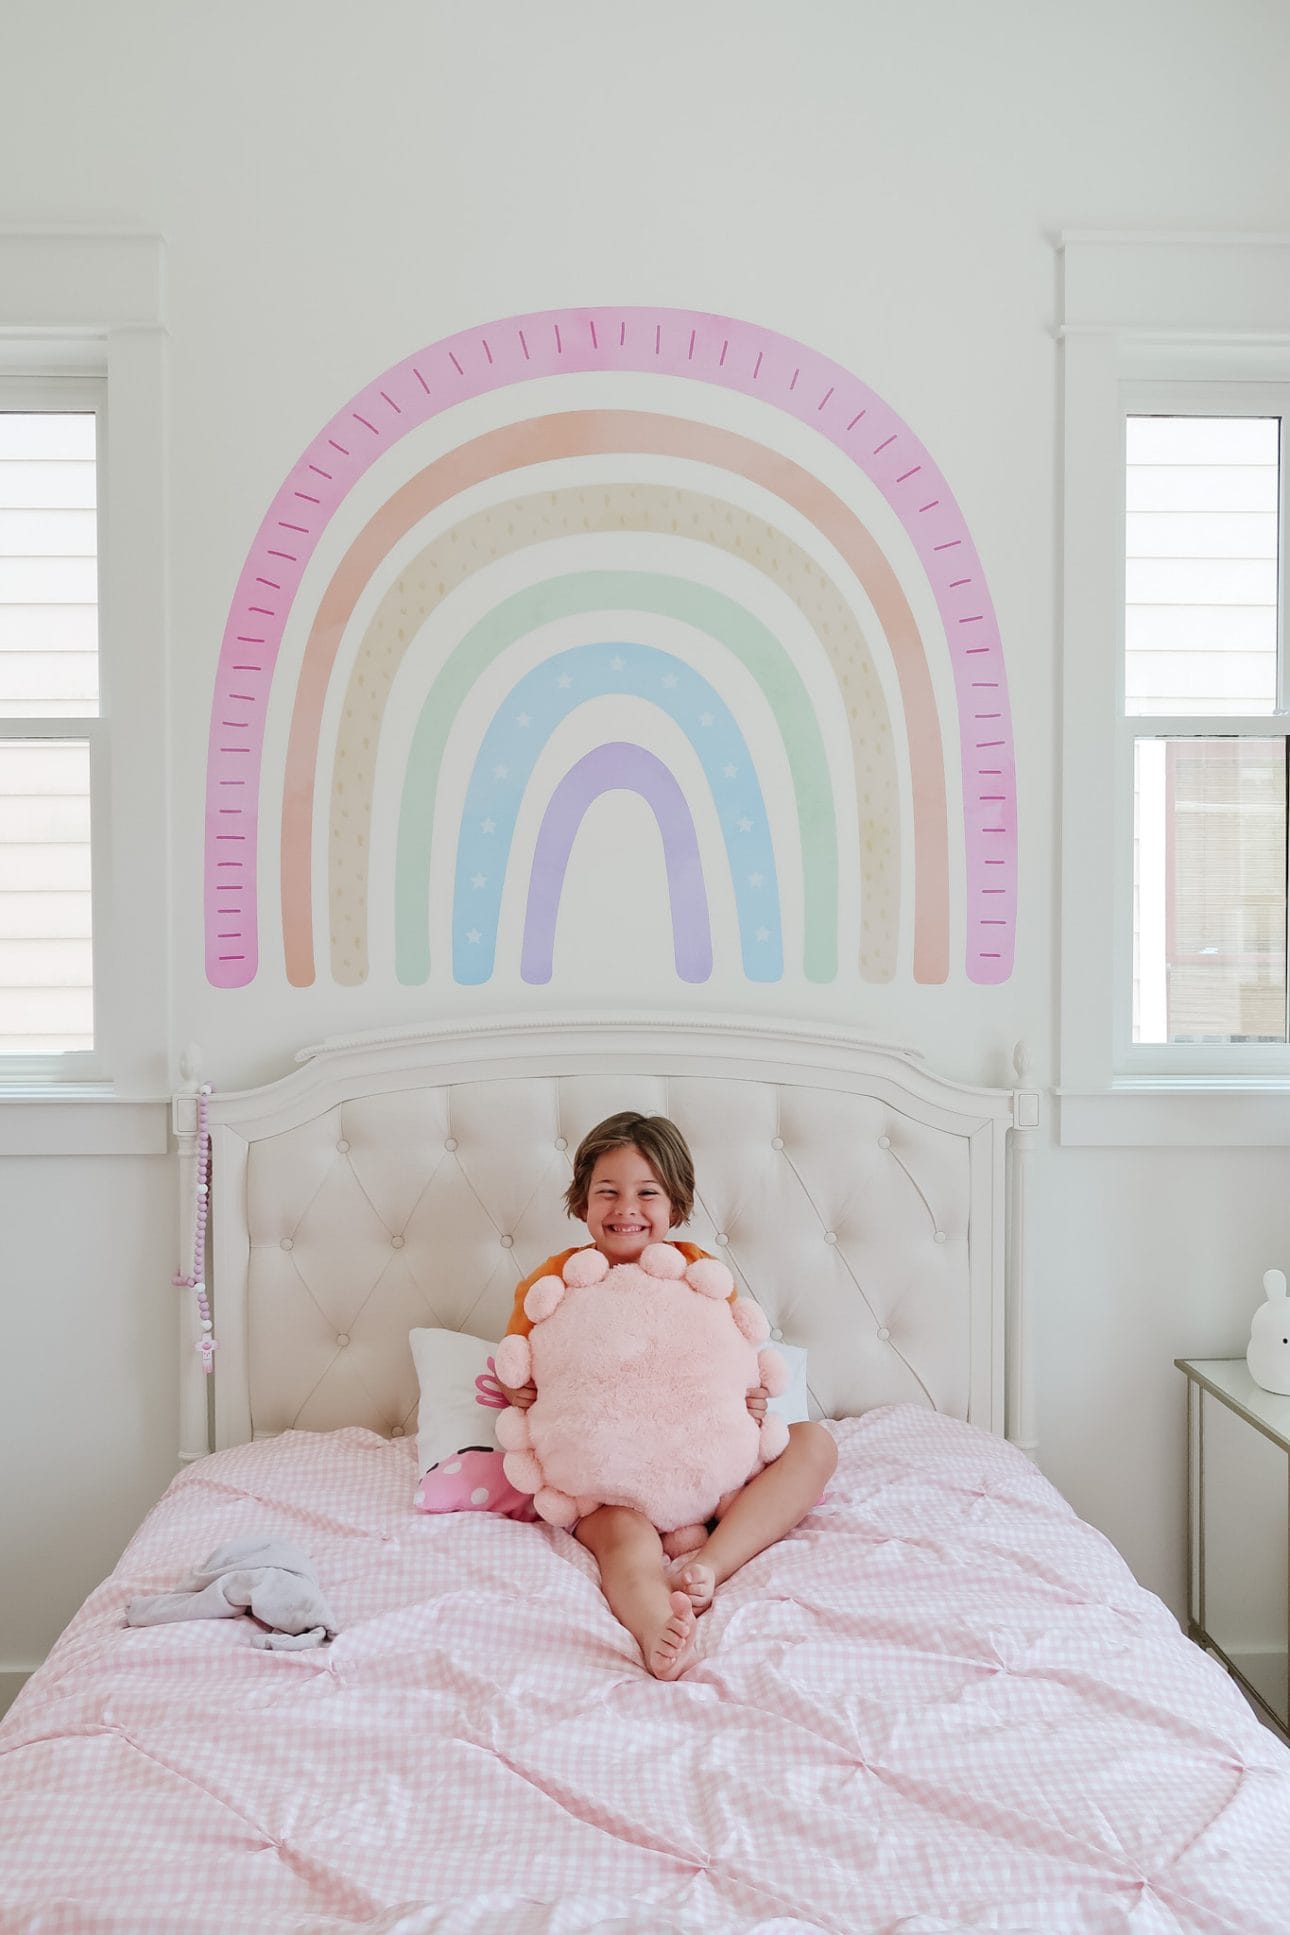 Jordans Room, Rainbow Decal, Pink Gingham Bedding, Pink Pillow